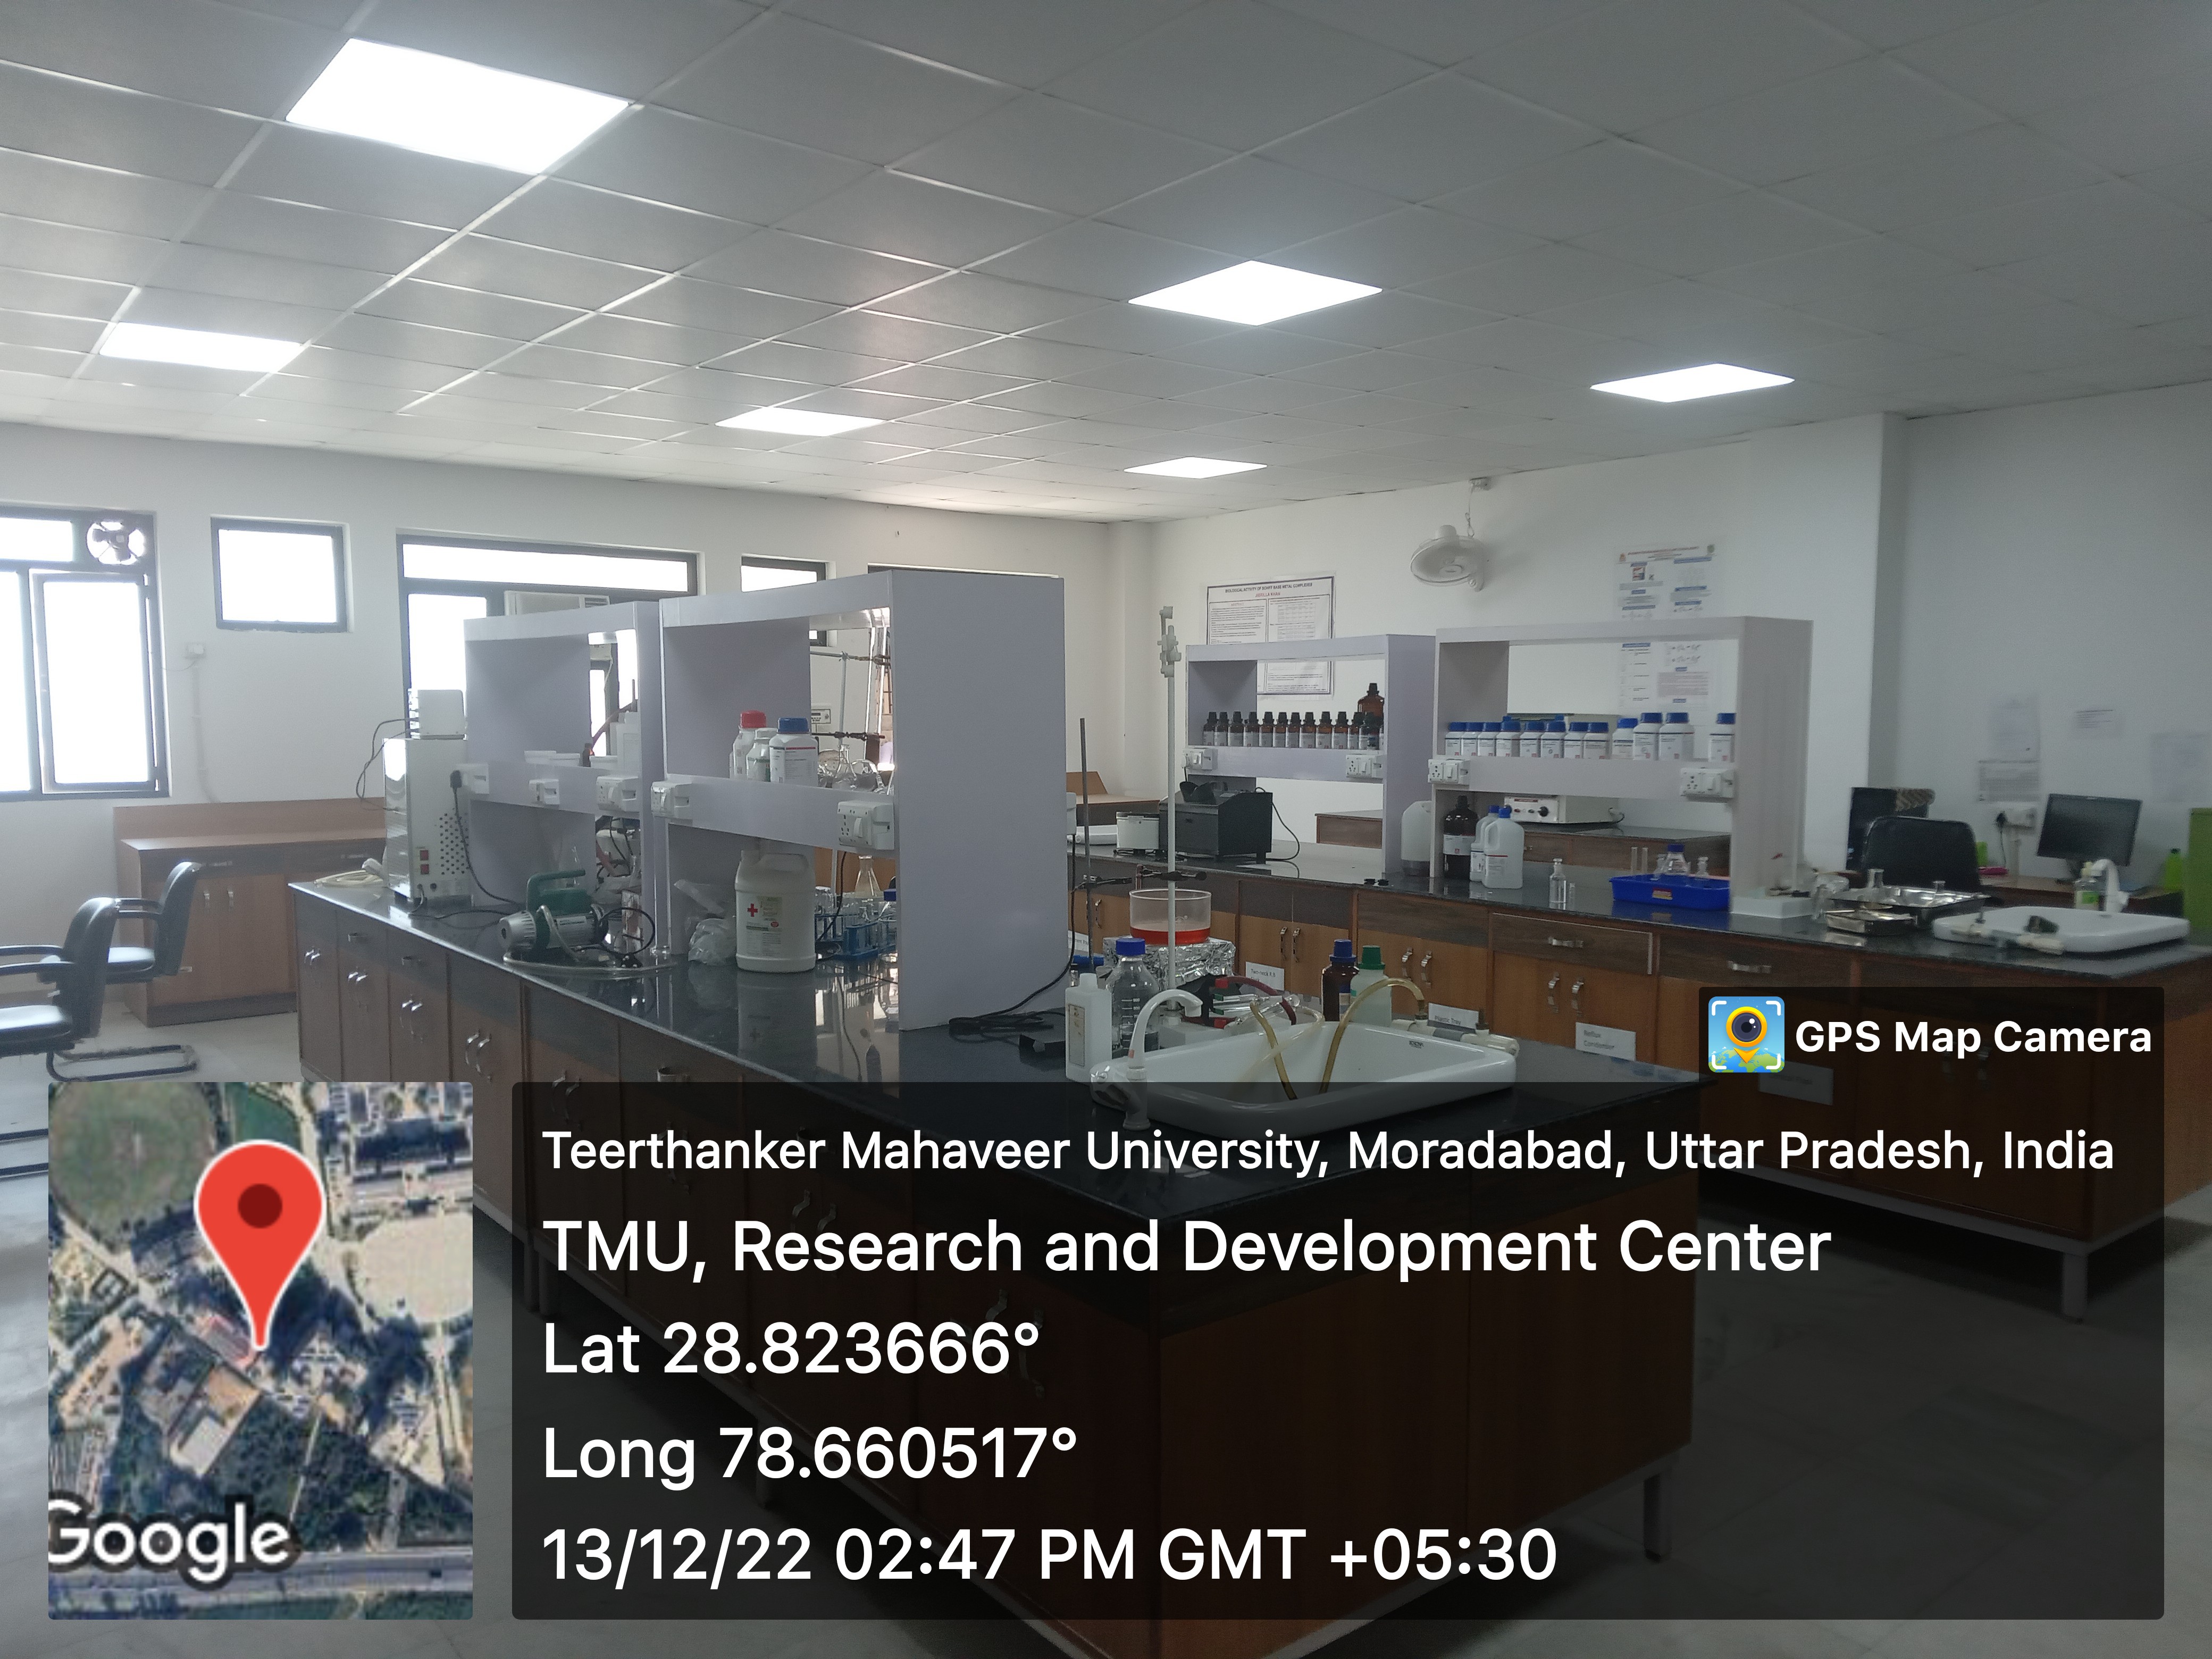 Infrastructure of Research & Development Center, TMU